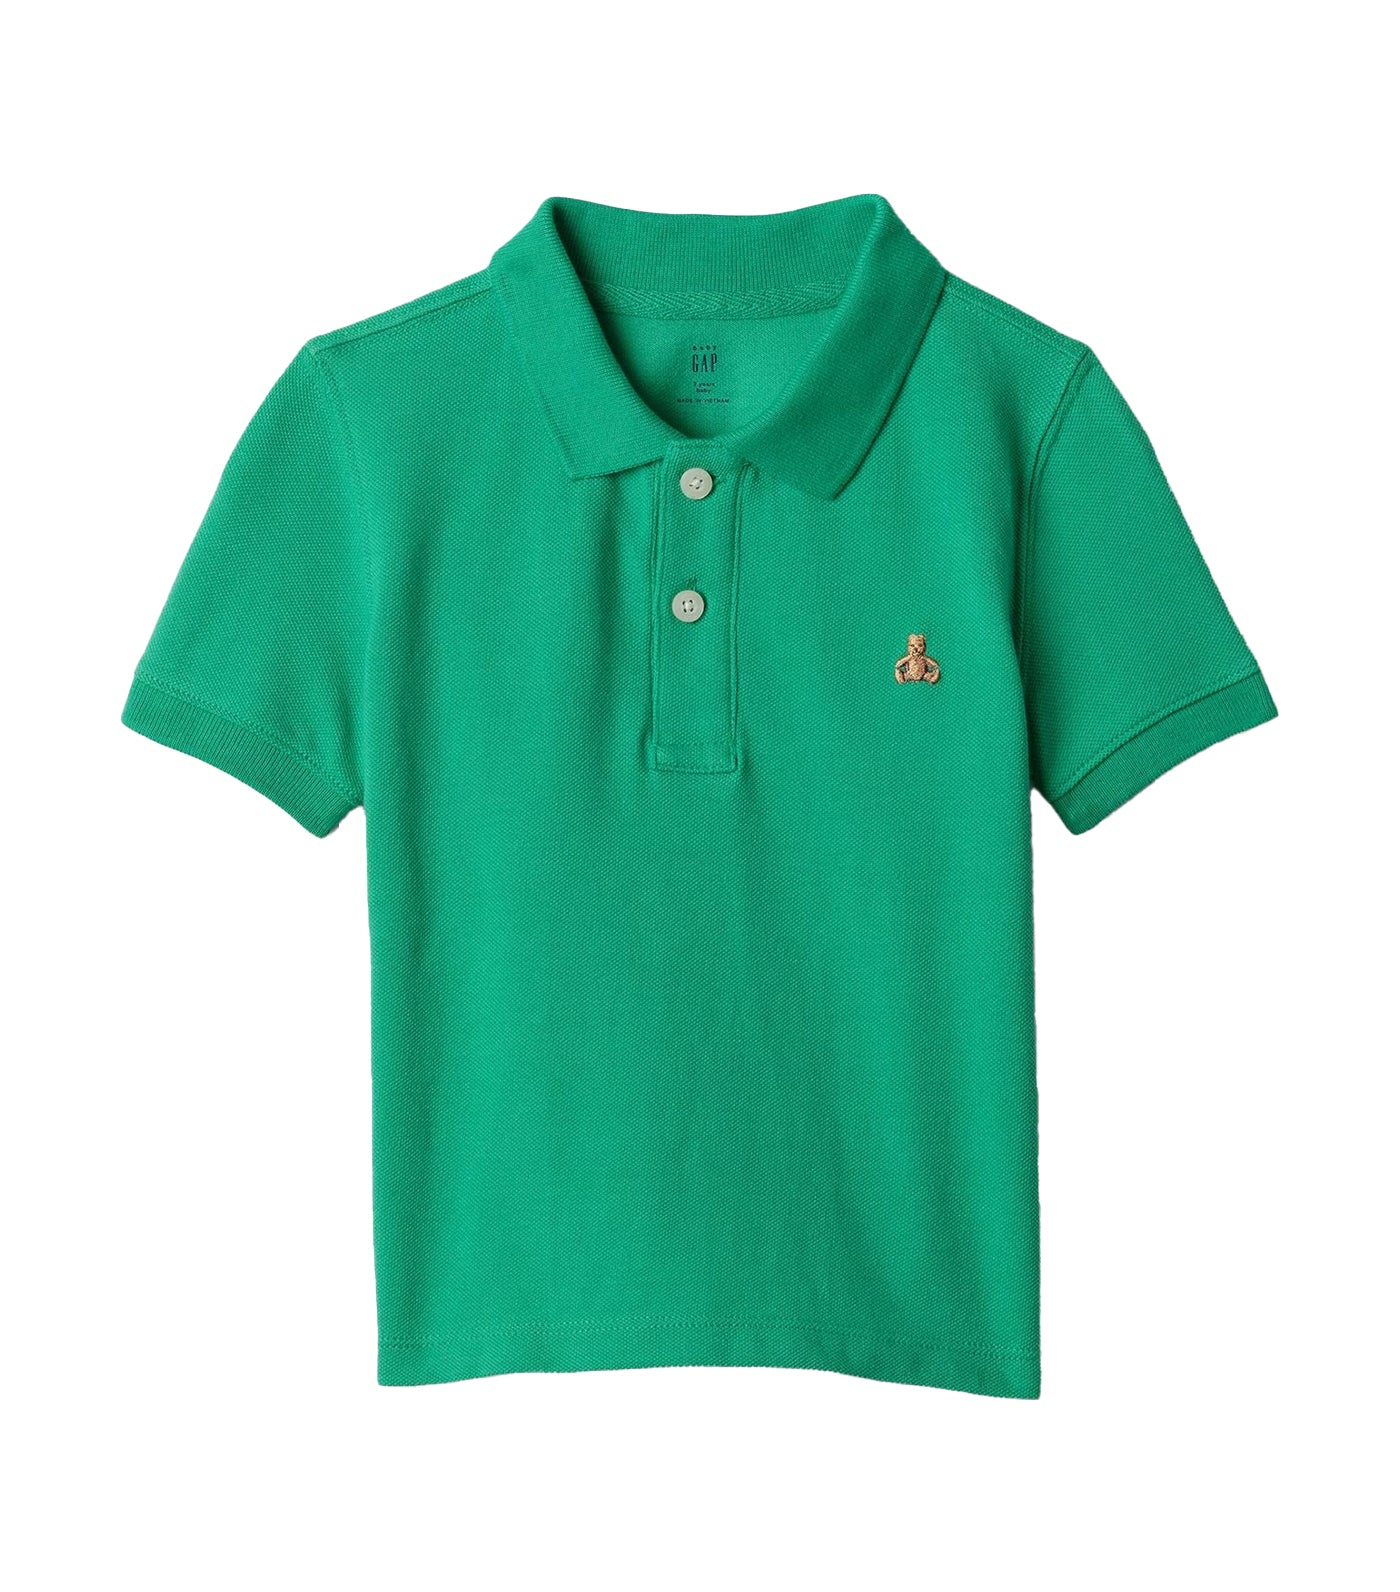 Toddler Polo T-Shirt Simply Green 17-5936